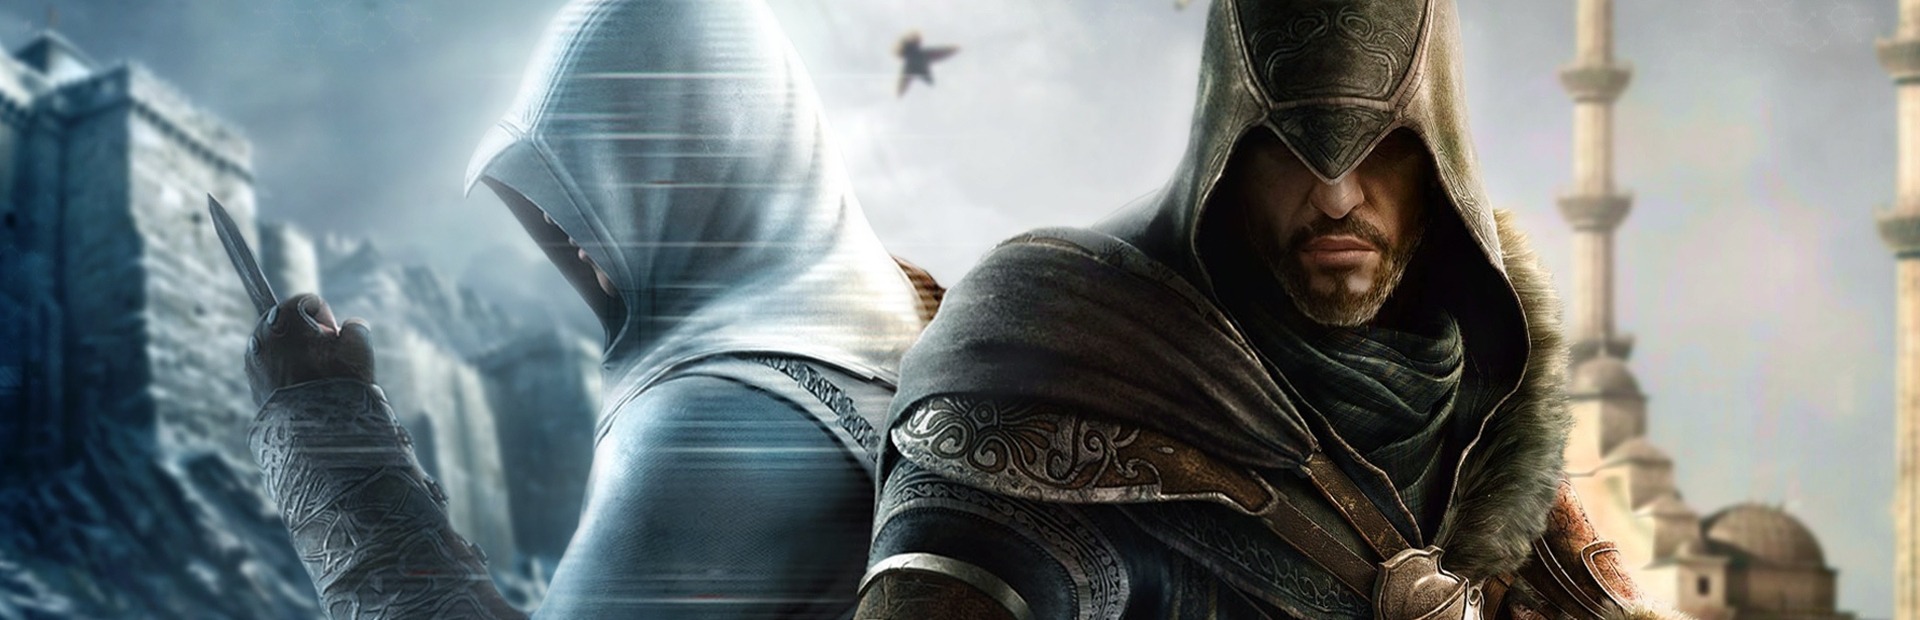 Banner Assassin’s Creed Rift